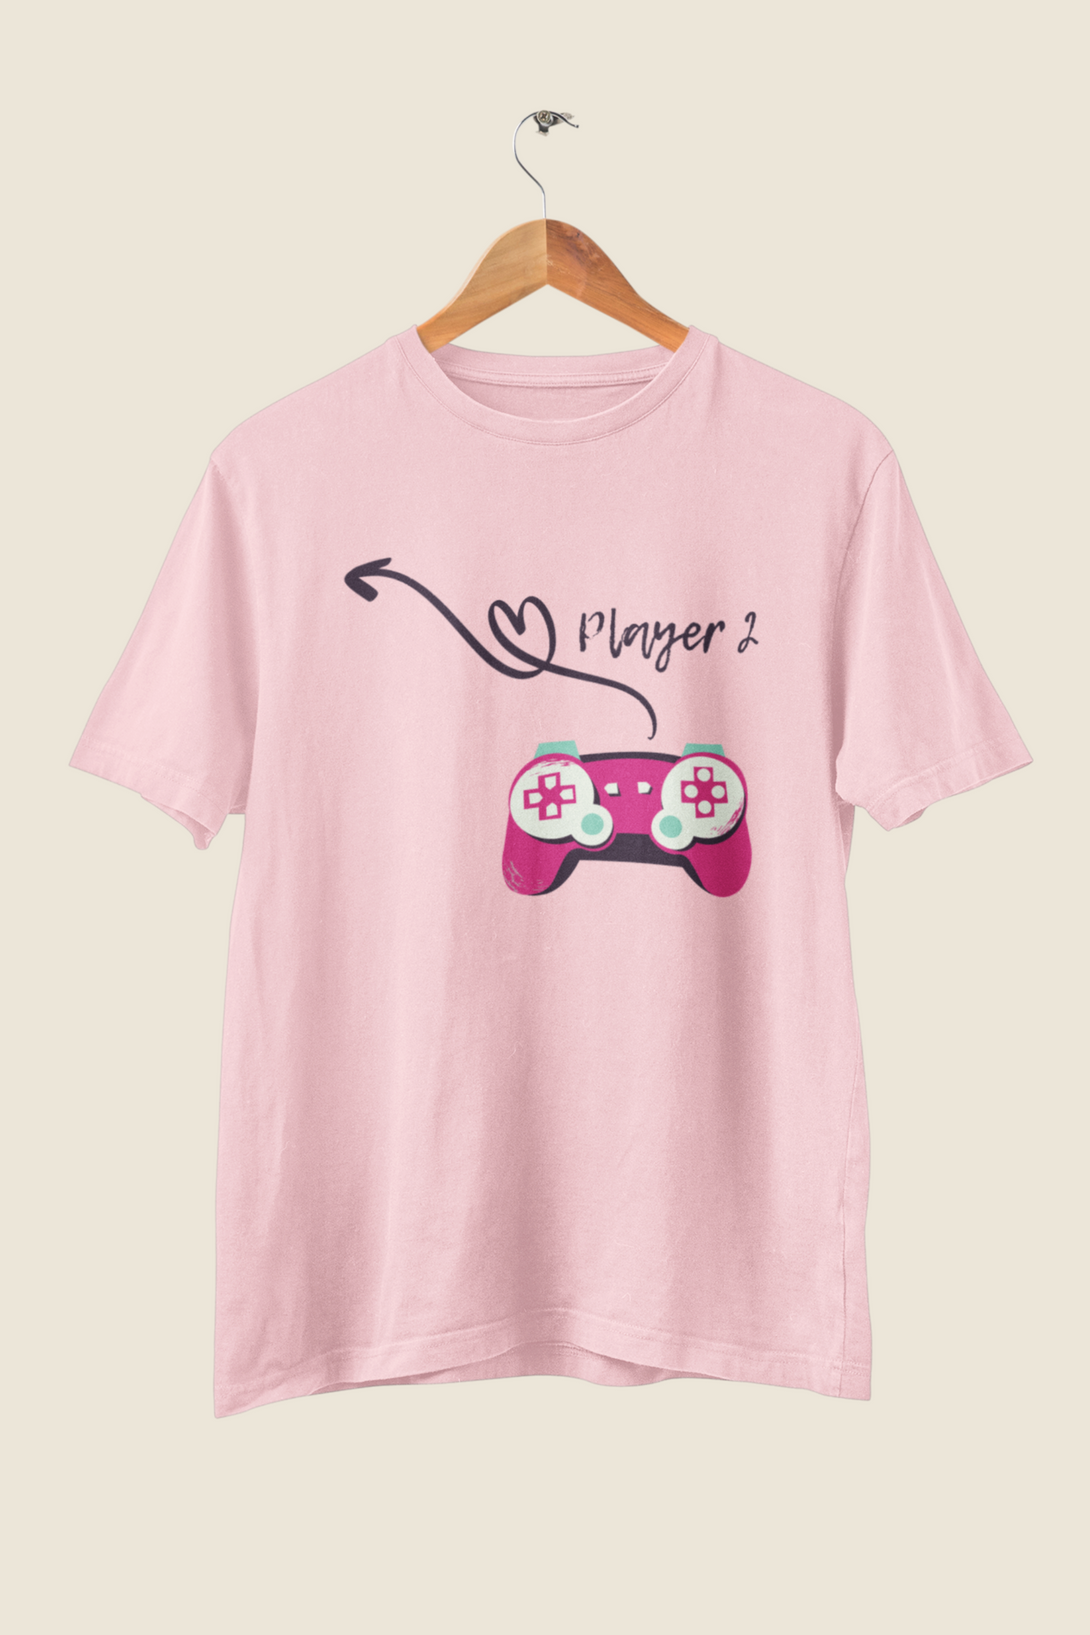 Game Player Couple T Shirt - WowWaves - 4